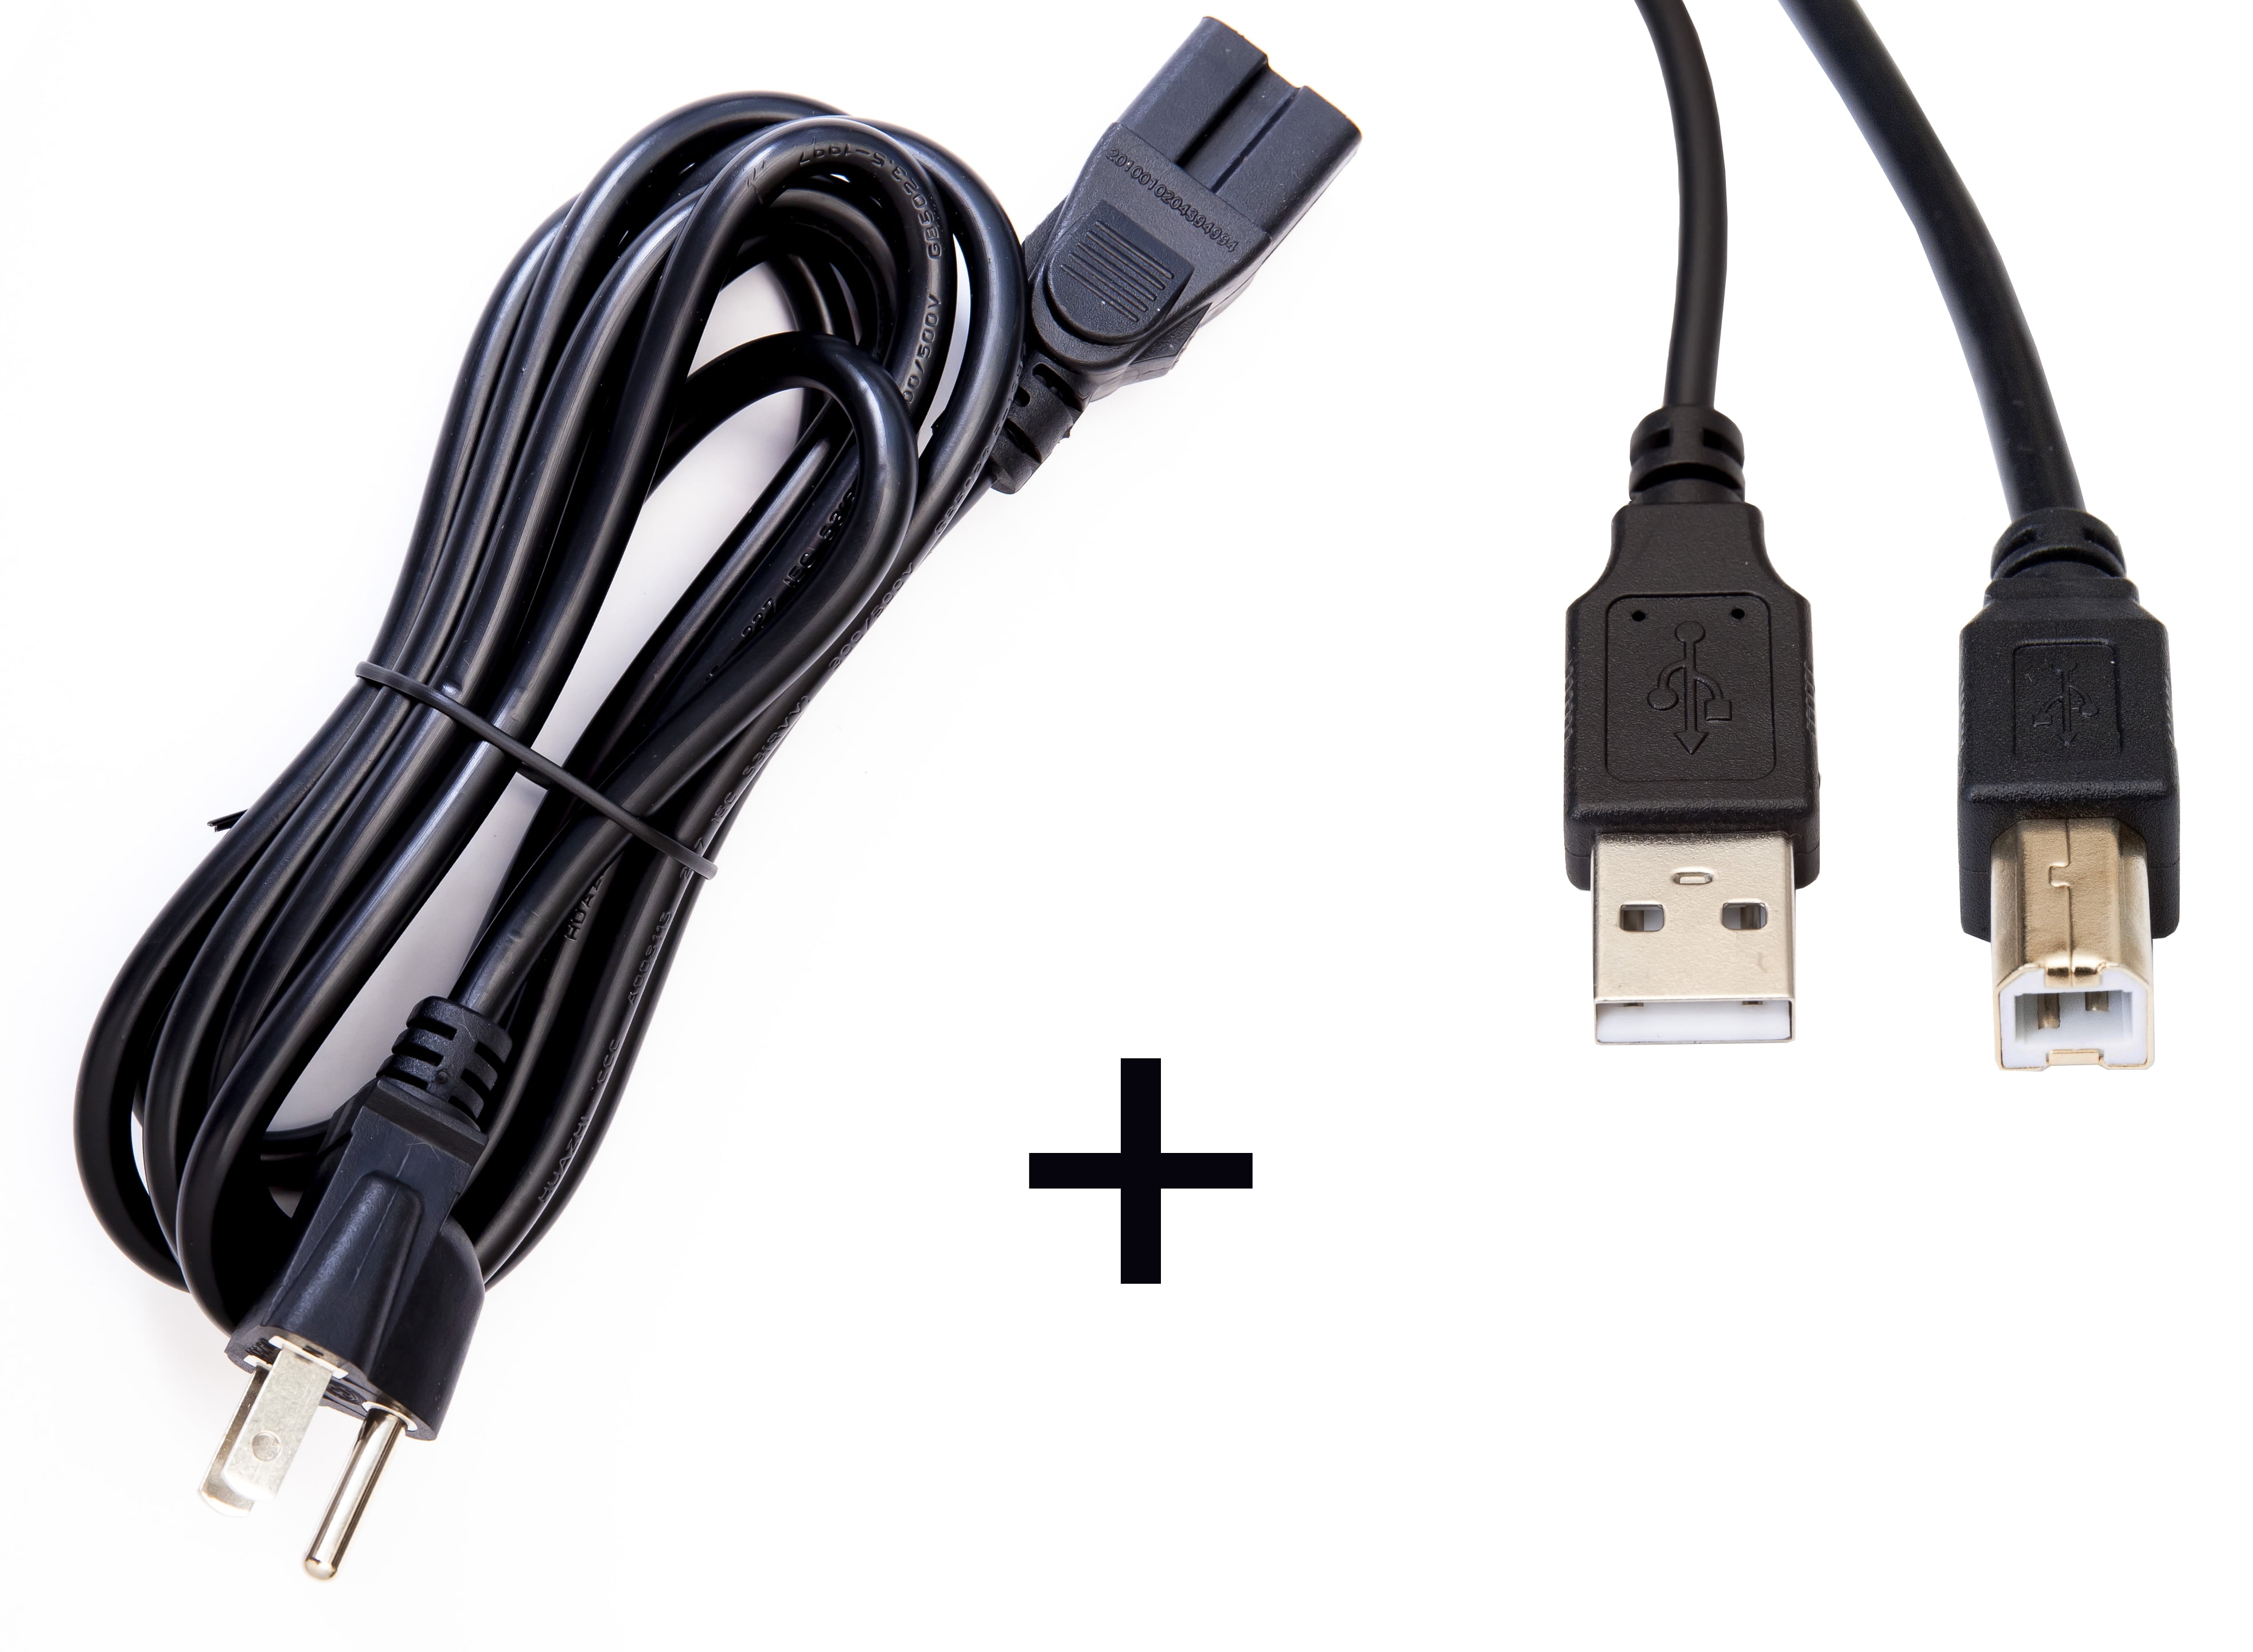 Digipartspower AC Power Cord Cable Plug for HP Photosmart 6520 e-All-in-One Printer CX017A#B1H SDGOB-1241 